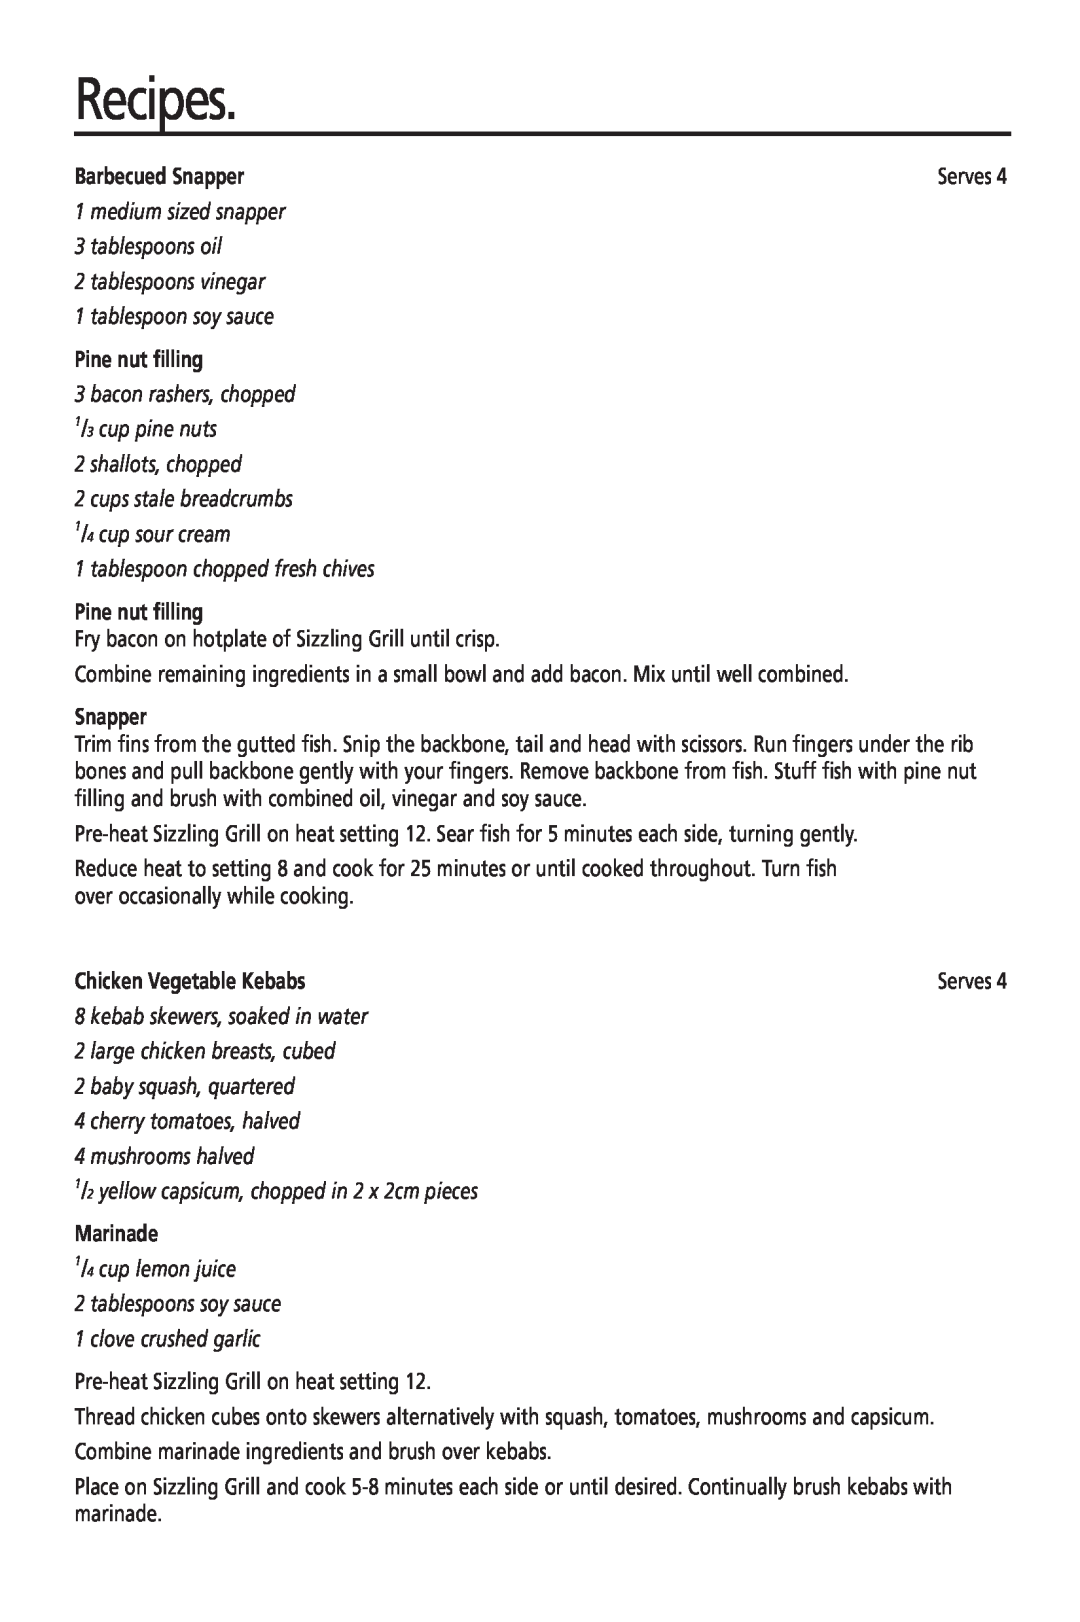 Sunbeam HG2300 manual Recipes, Barbecued Snapper, Pine nut filling, Chicken Vegetable Kebabs, Marinade 